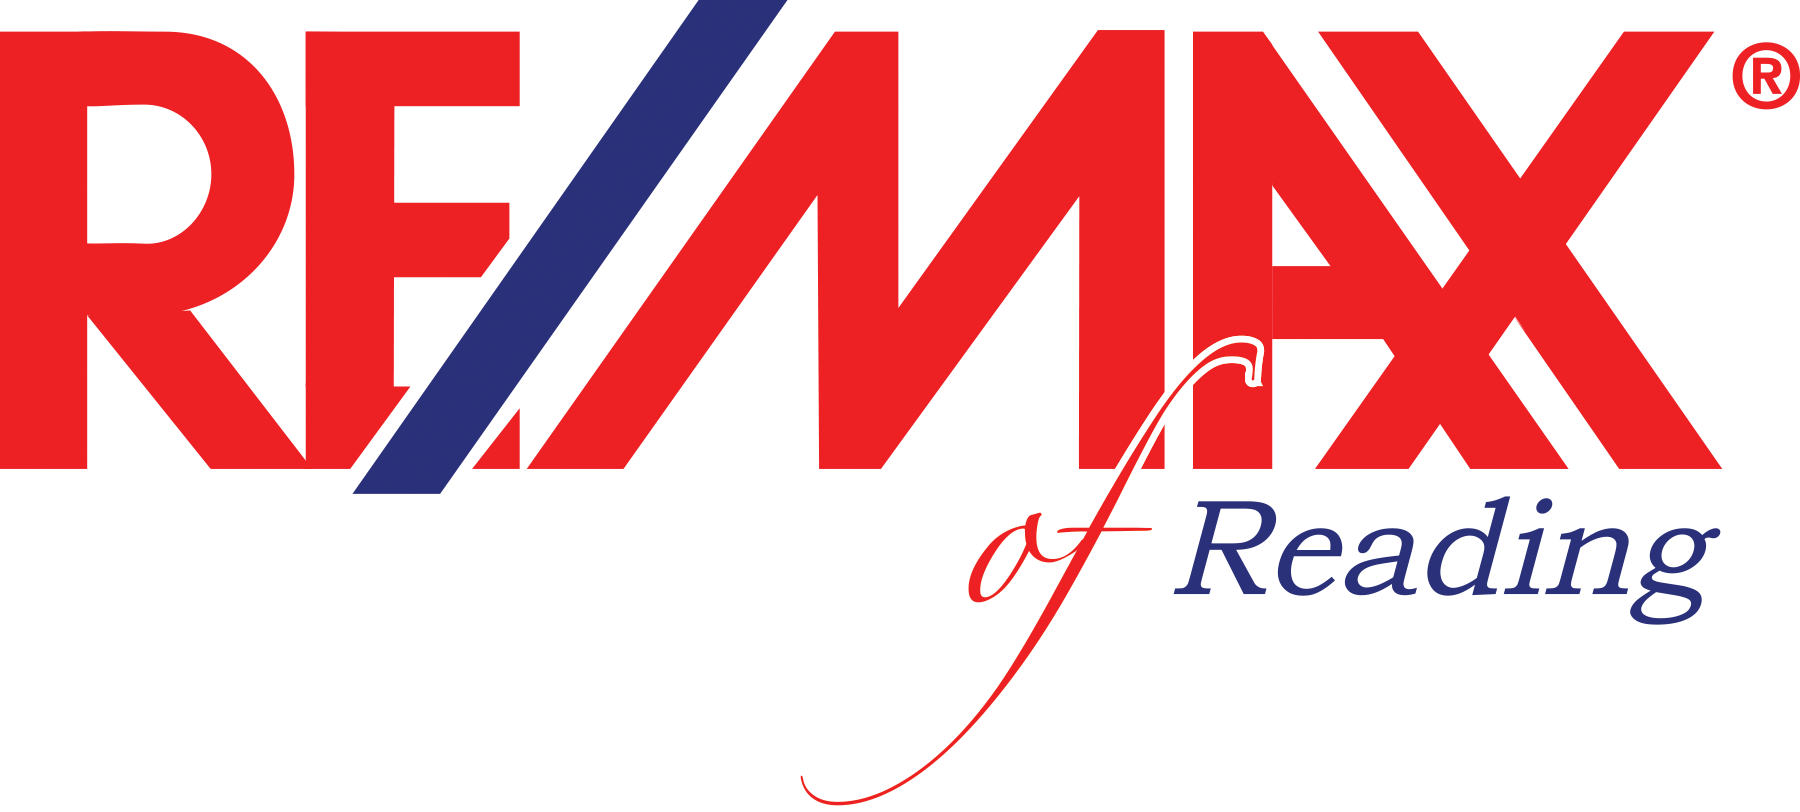 Remax Elite Brentwood Tn Logo (1800x812)